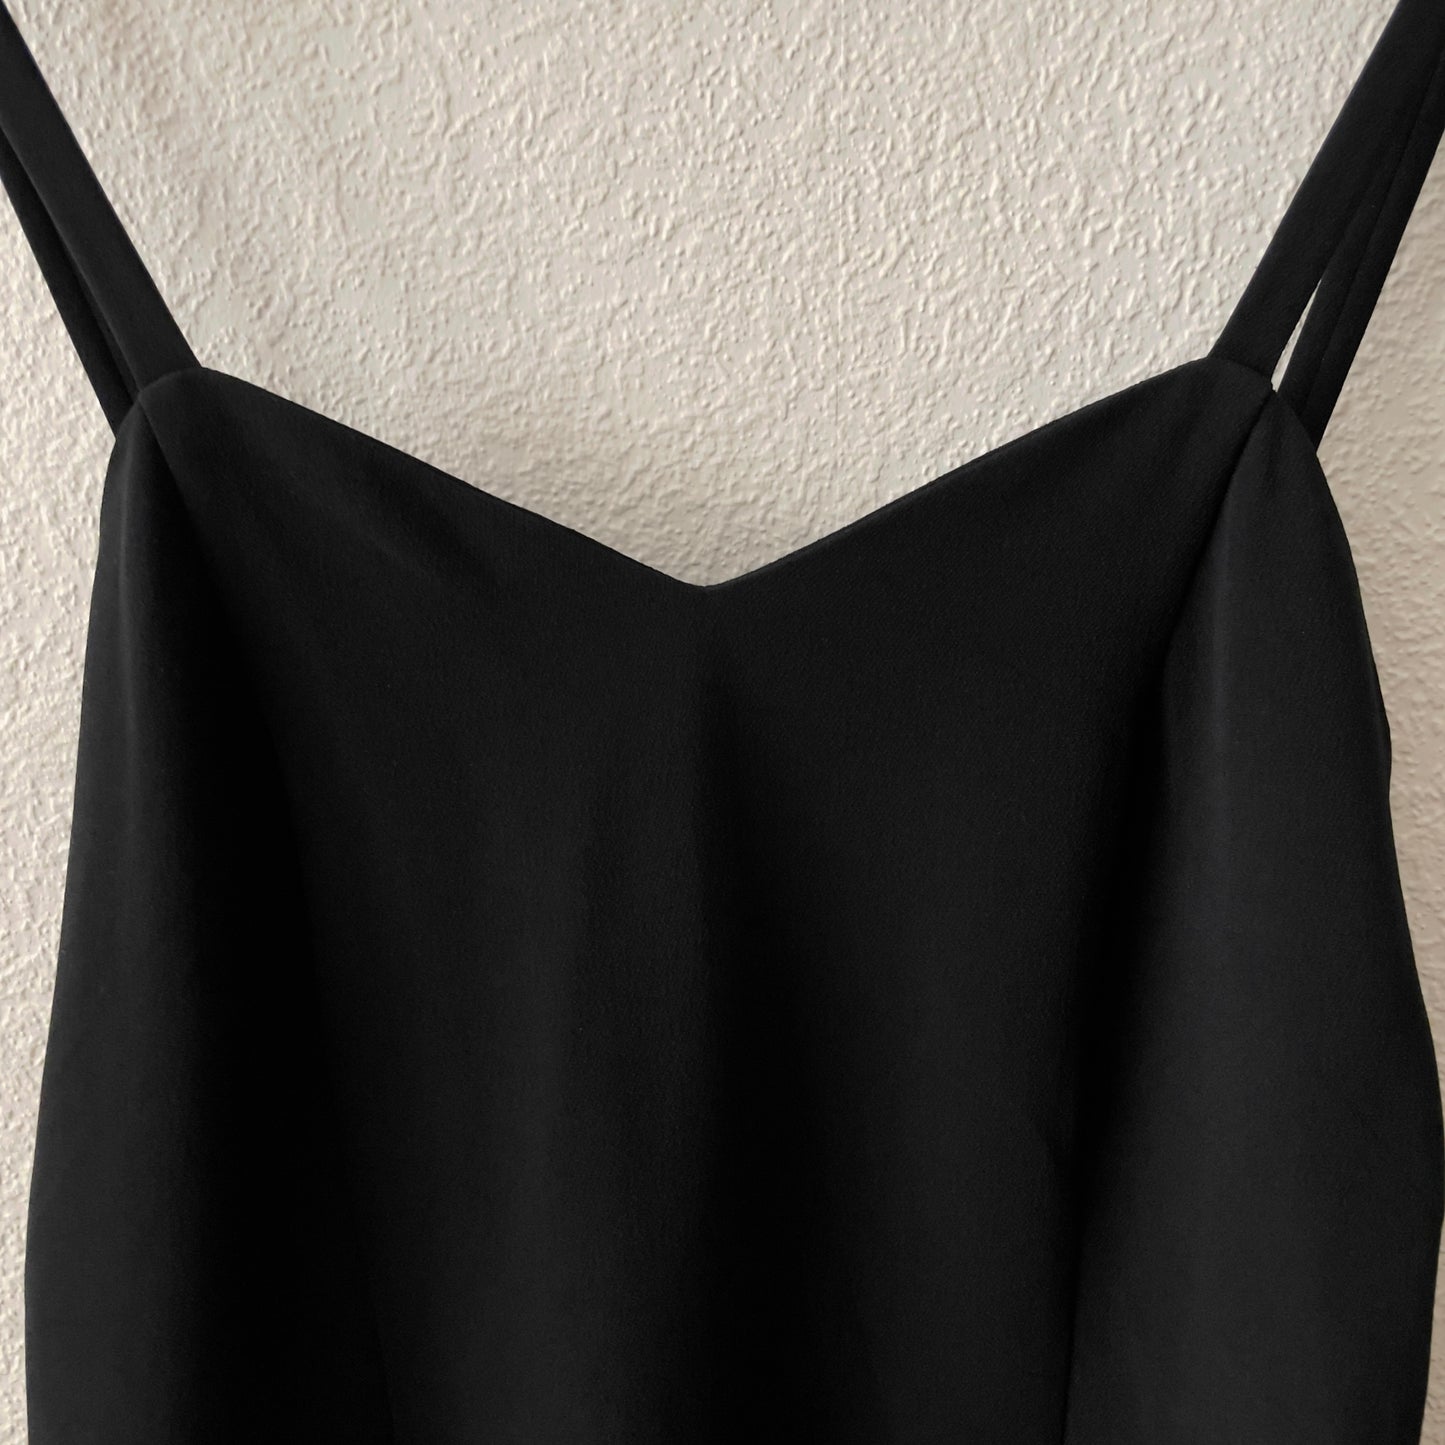 Vintage Little Black Dress - Nic Janik